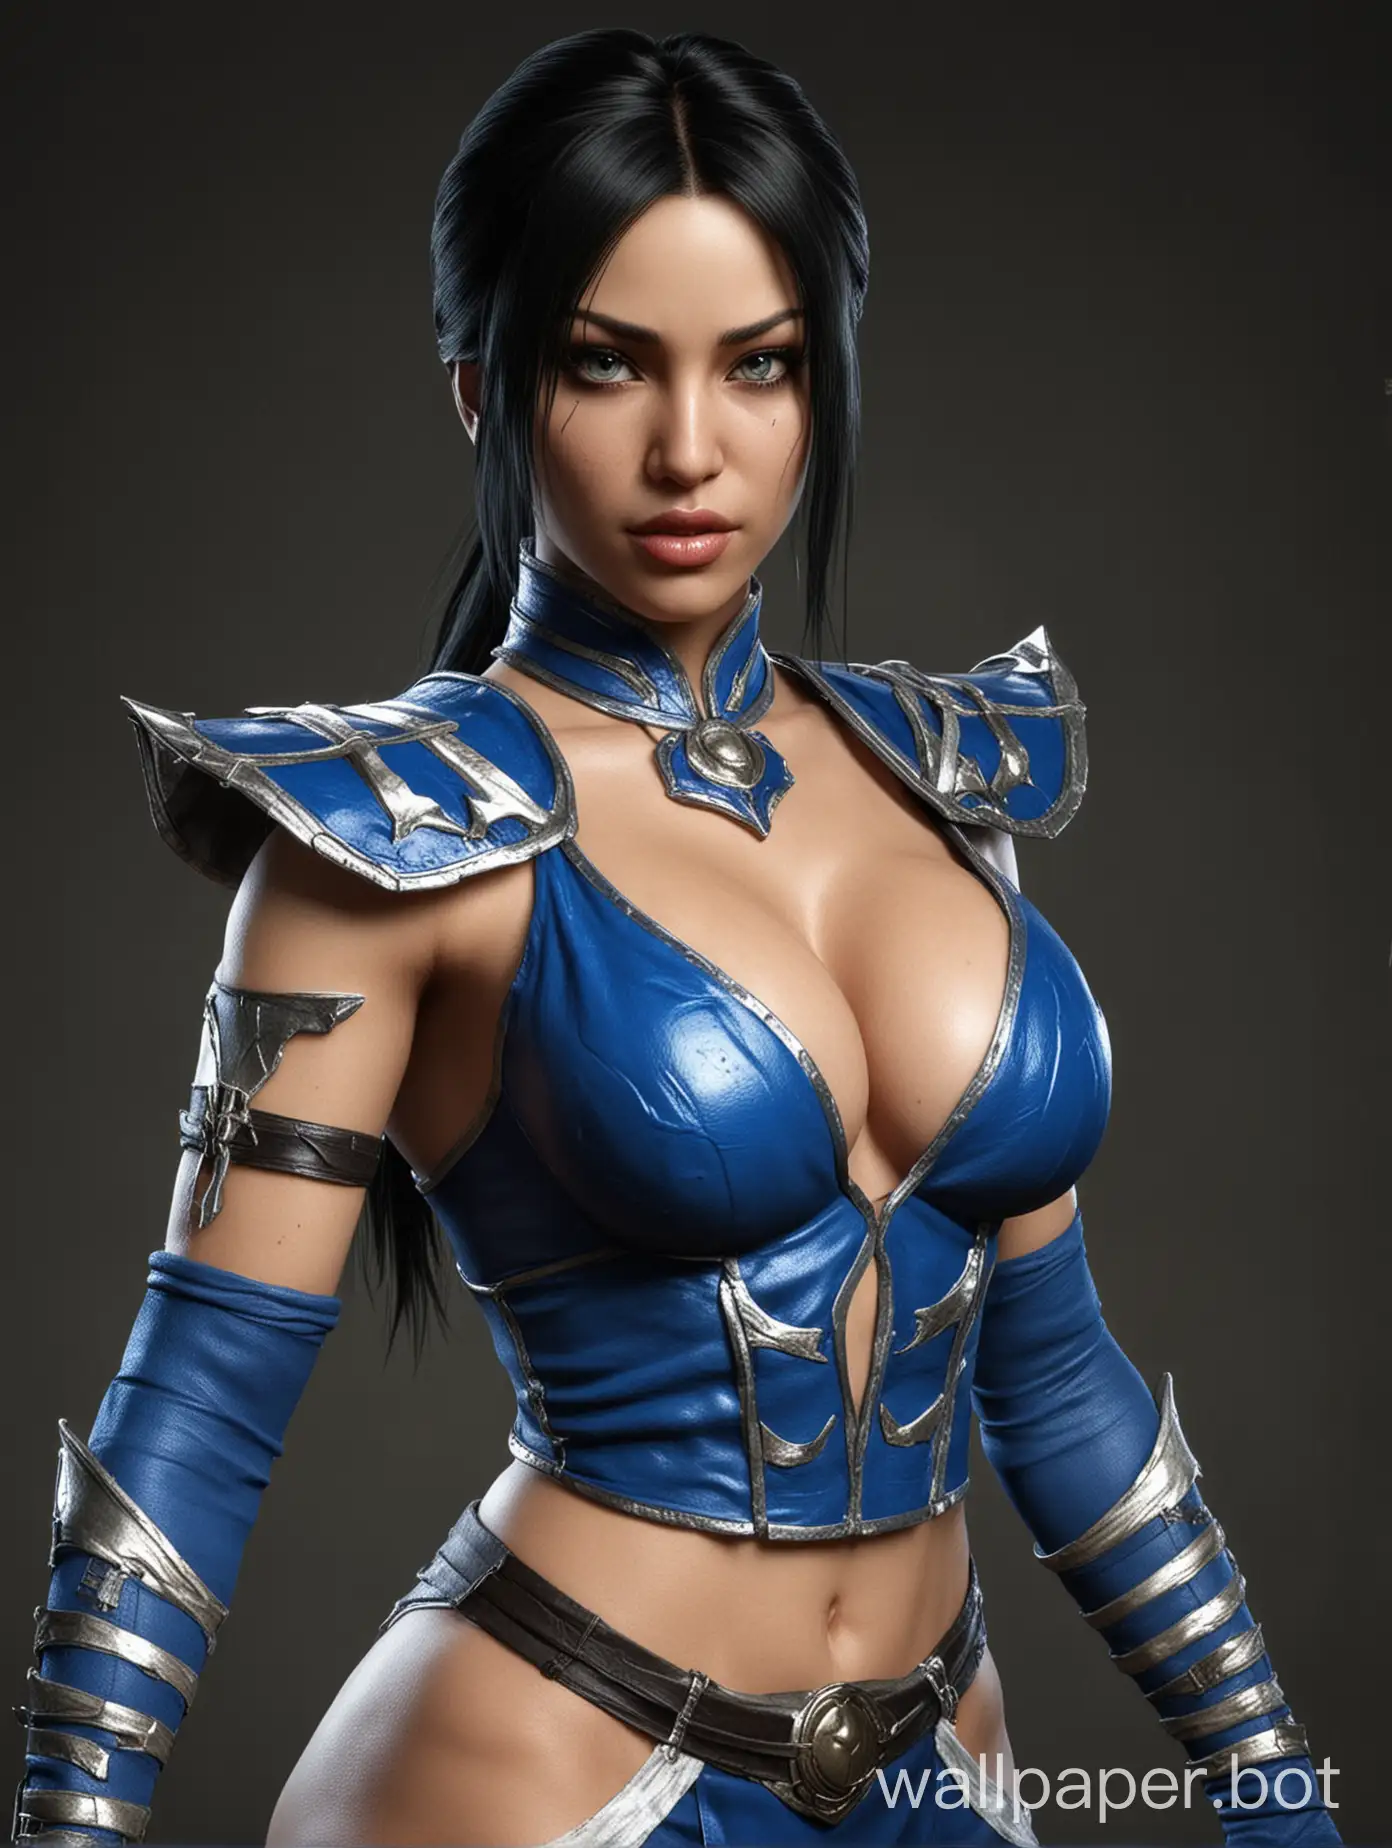 Kitana from Mortal Kombat. big breast. white skins. fatalality act.